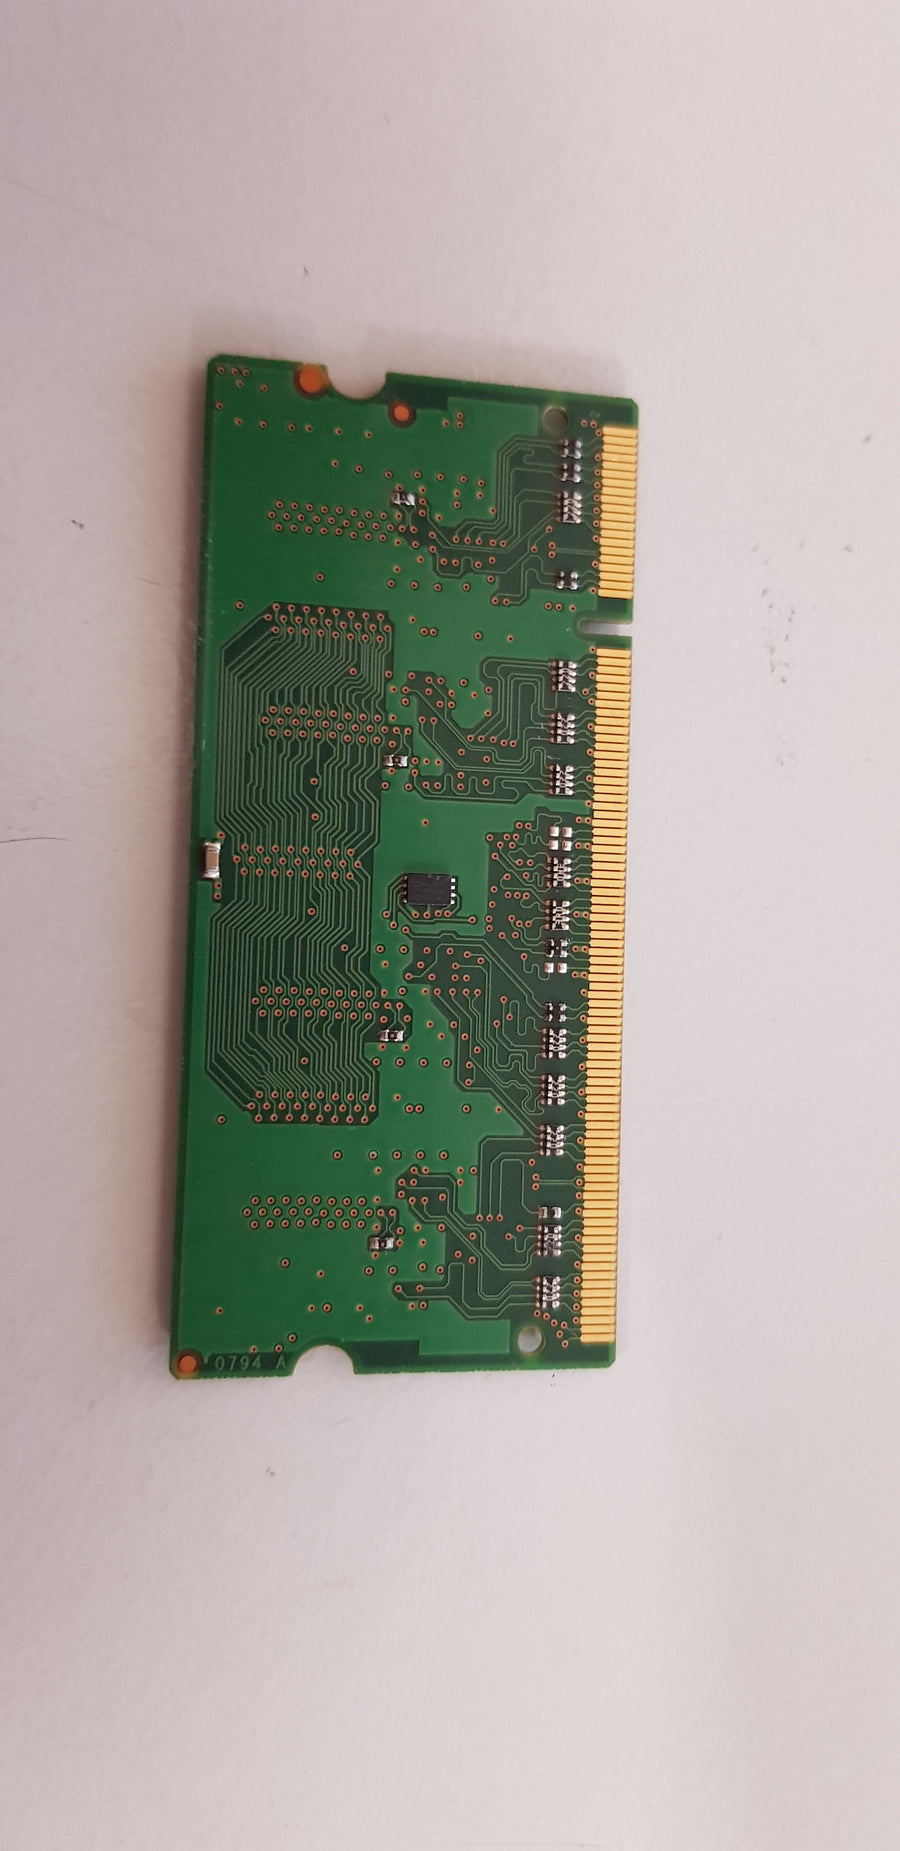 Micron 256MB 1Rx16 PC2 6400S  DDR2 SDRAM 256MB 800MT/s 200-SODIMM Memory Module (MT4HTF3264HZ-800H1)